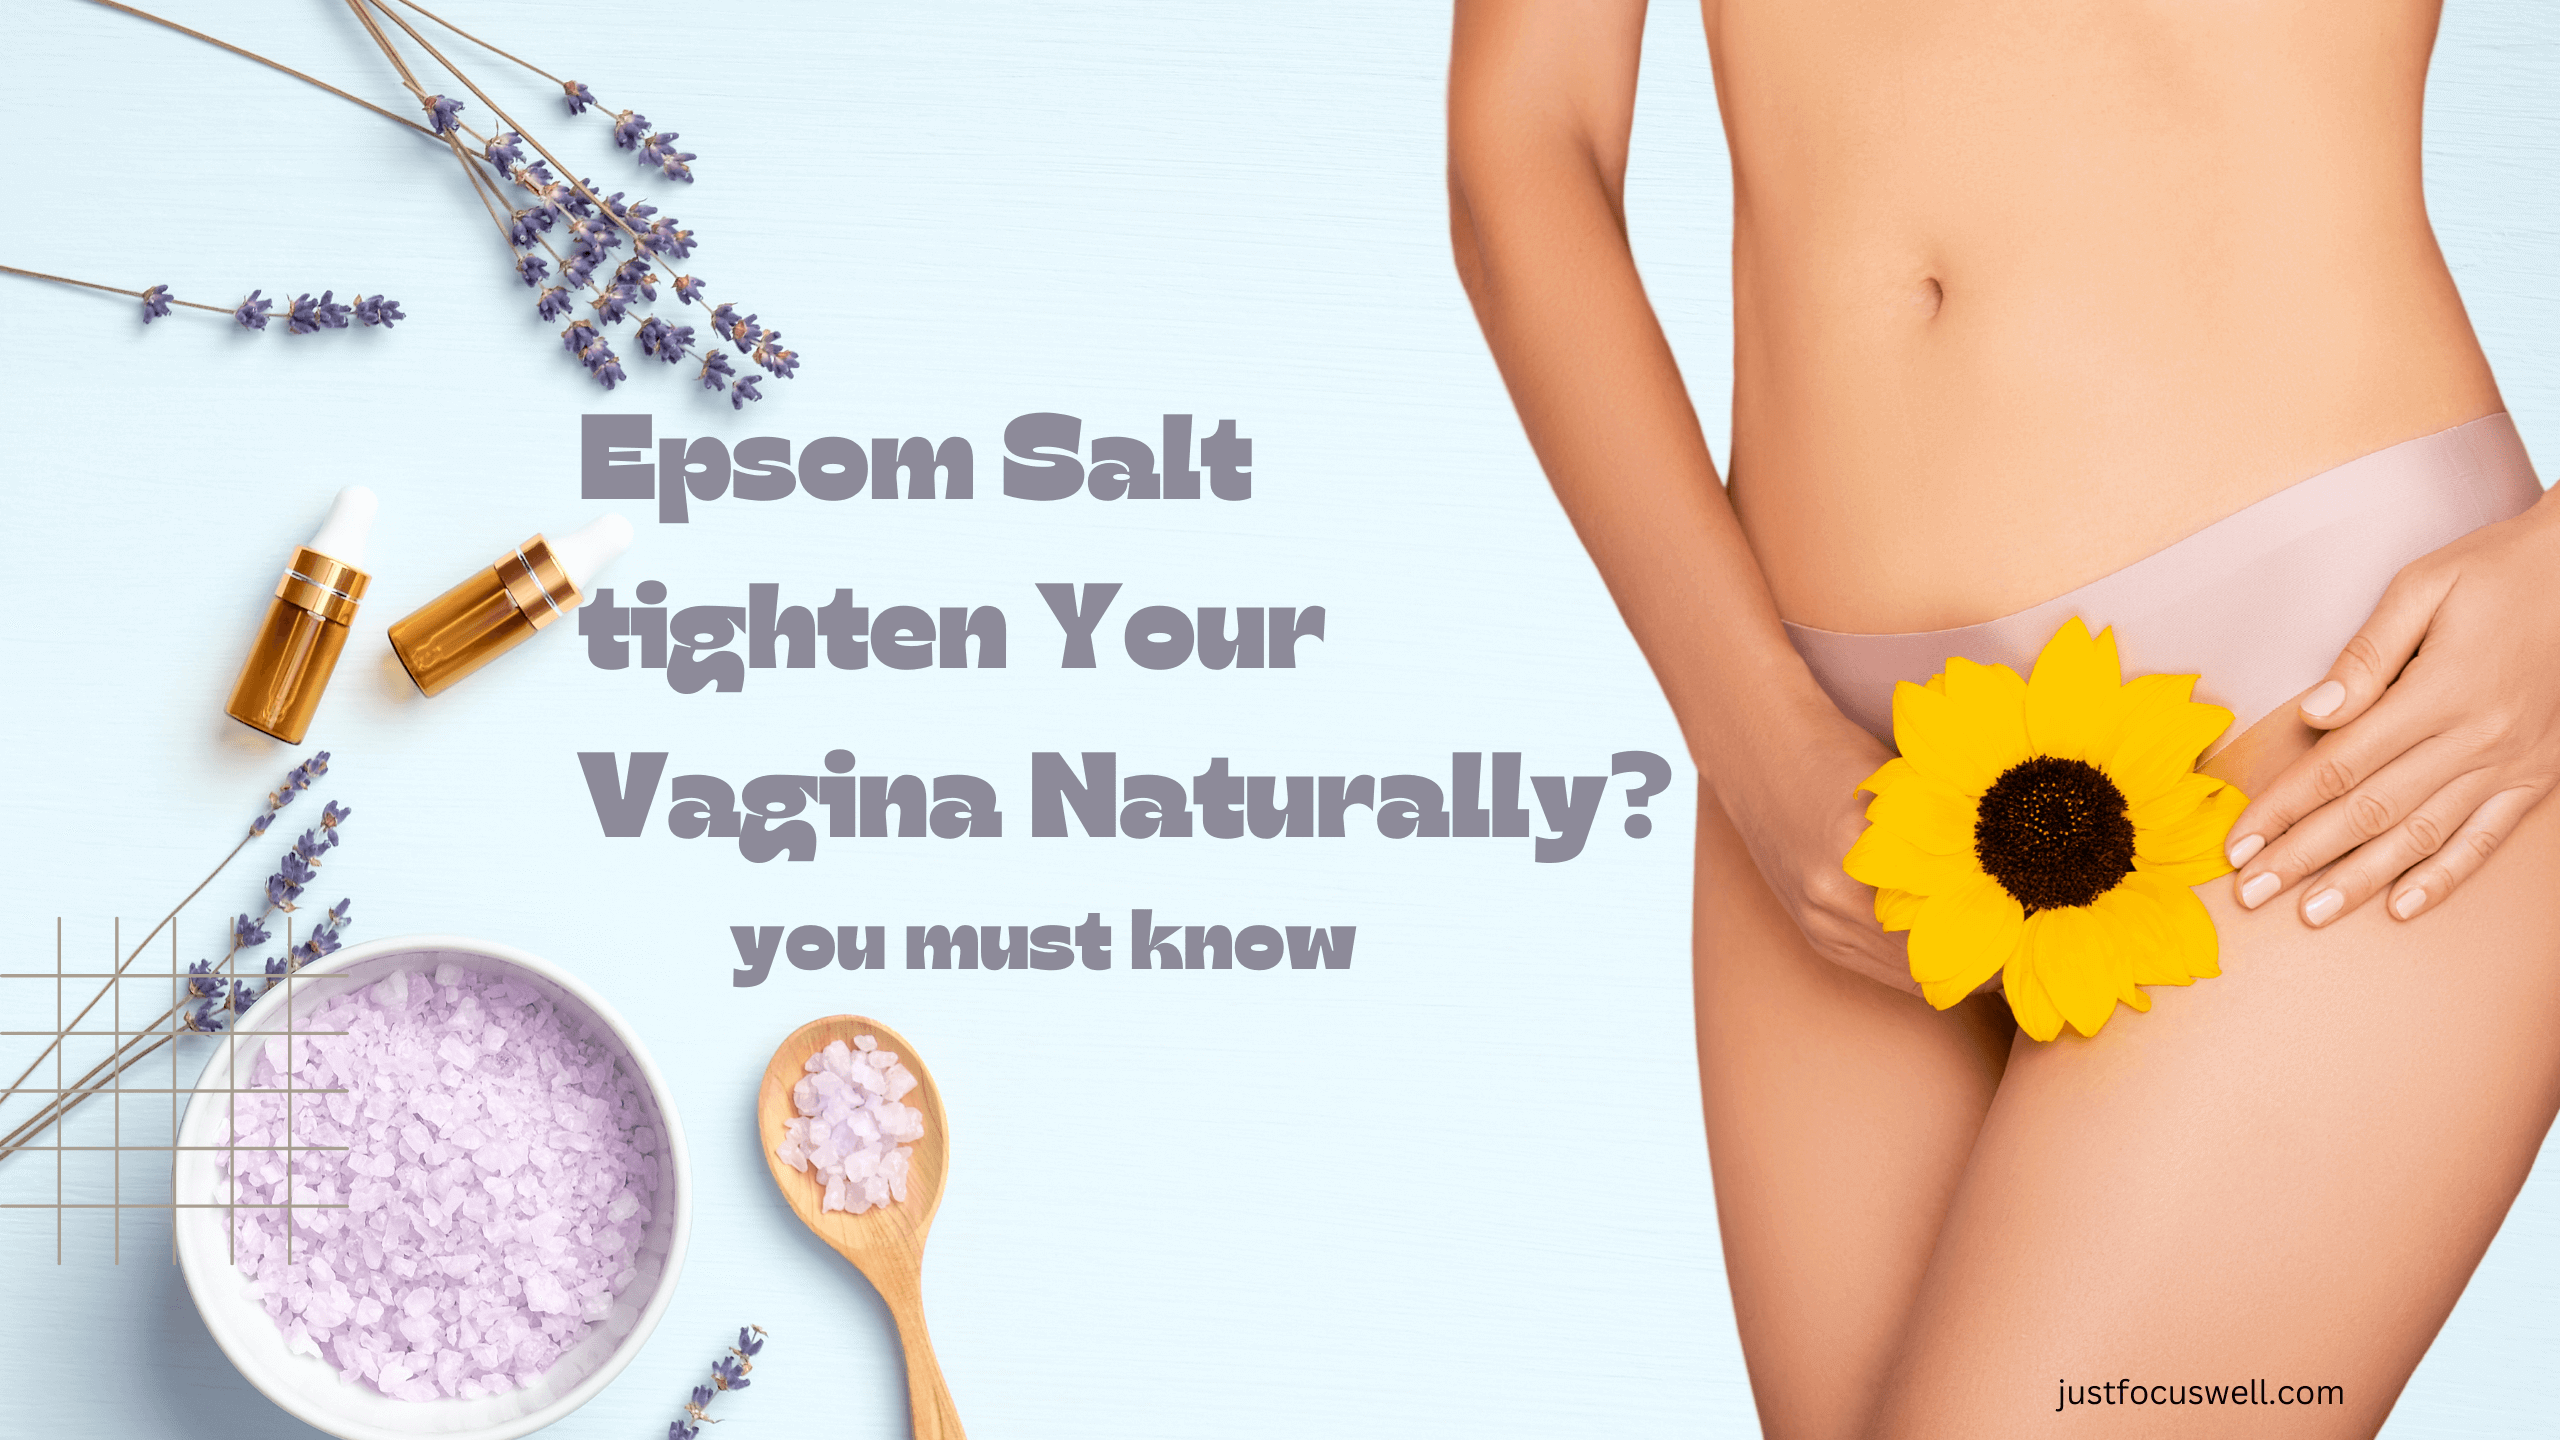 Does Epsom Salt tighten Your Vagina Naturally?